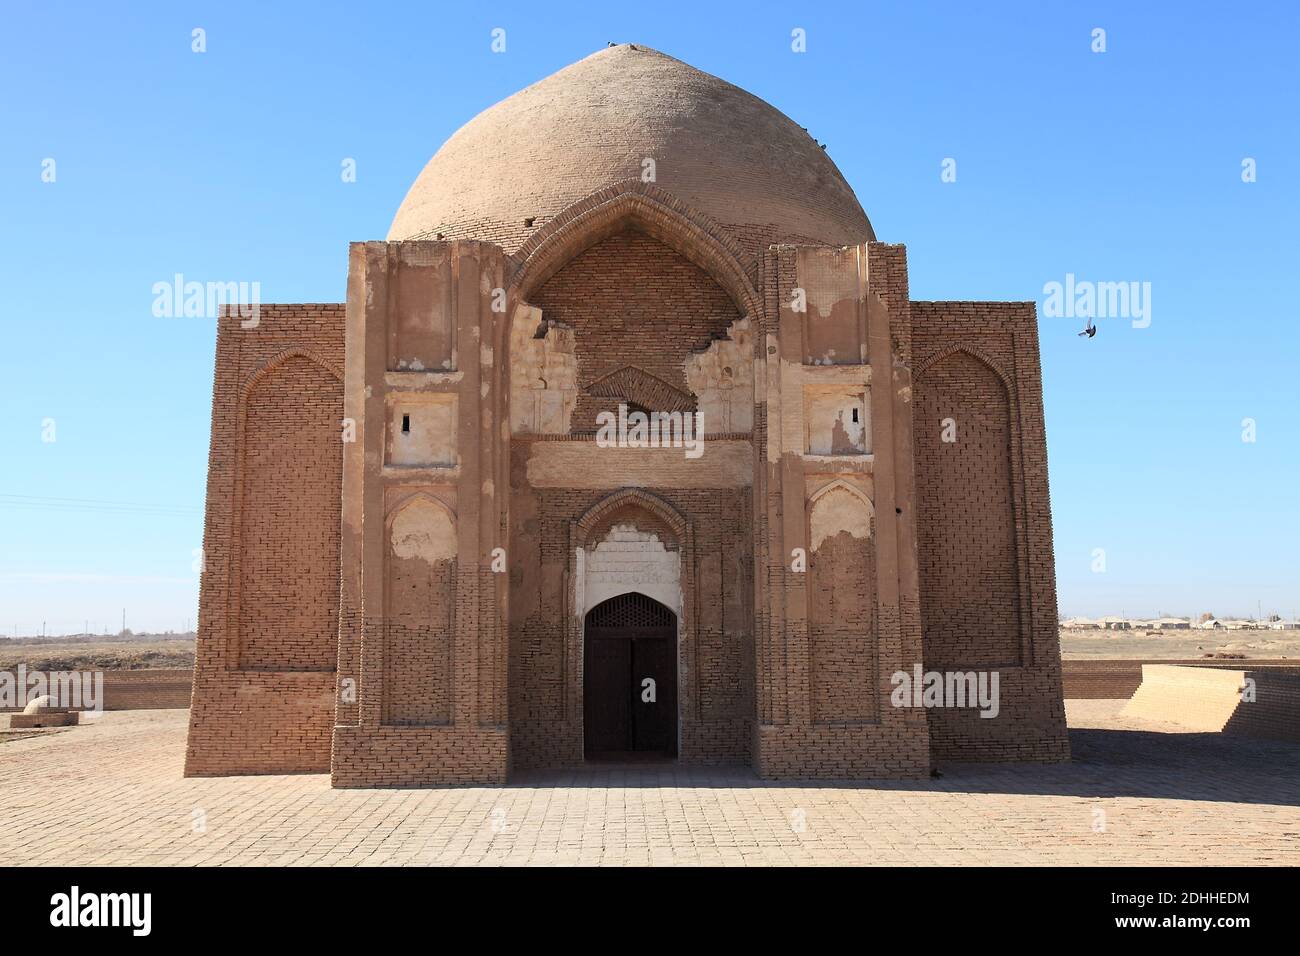 La Tumba de Ebul Fazil fue construida en el siglo XI durante el período del Gran Seljuk. La obra de ladrillo de la tumba es sorprendente. Serakhs, Turkmenistán. Foto de stock